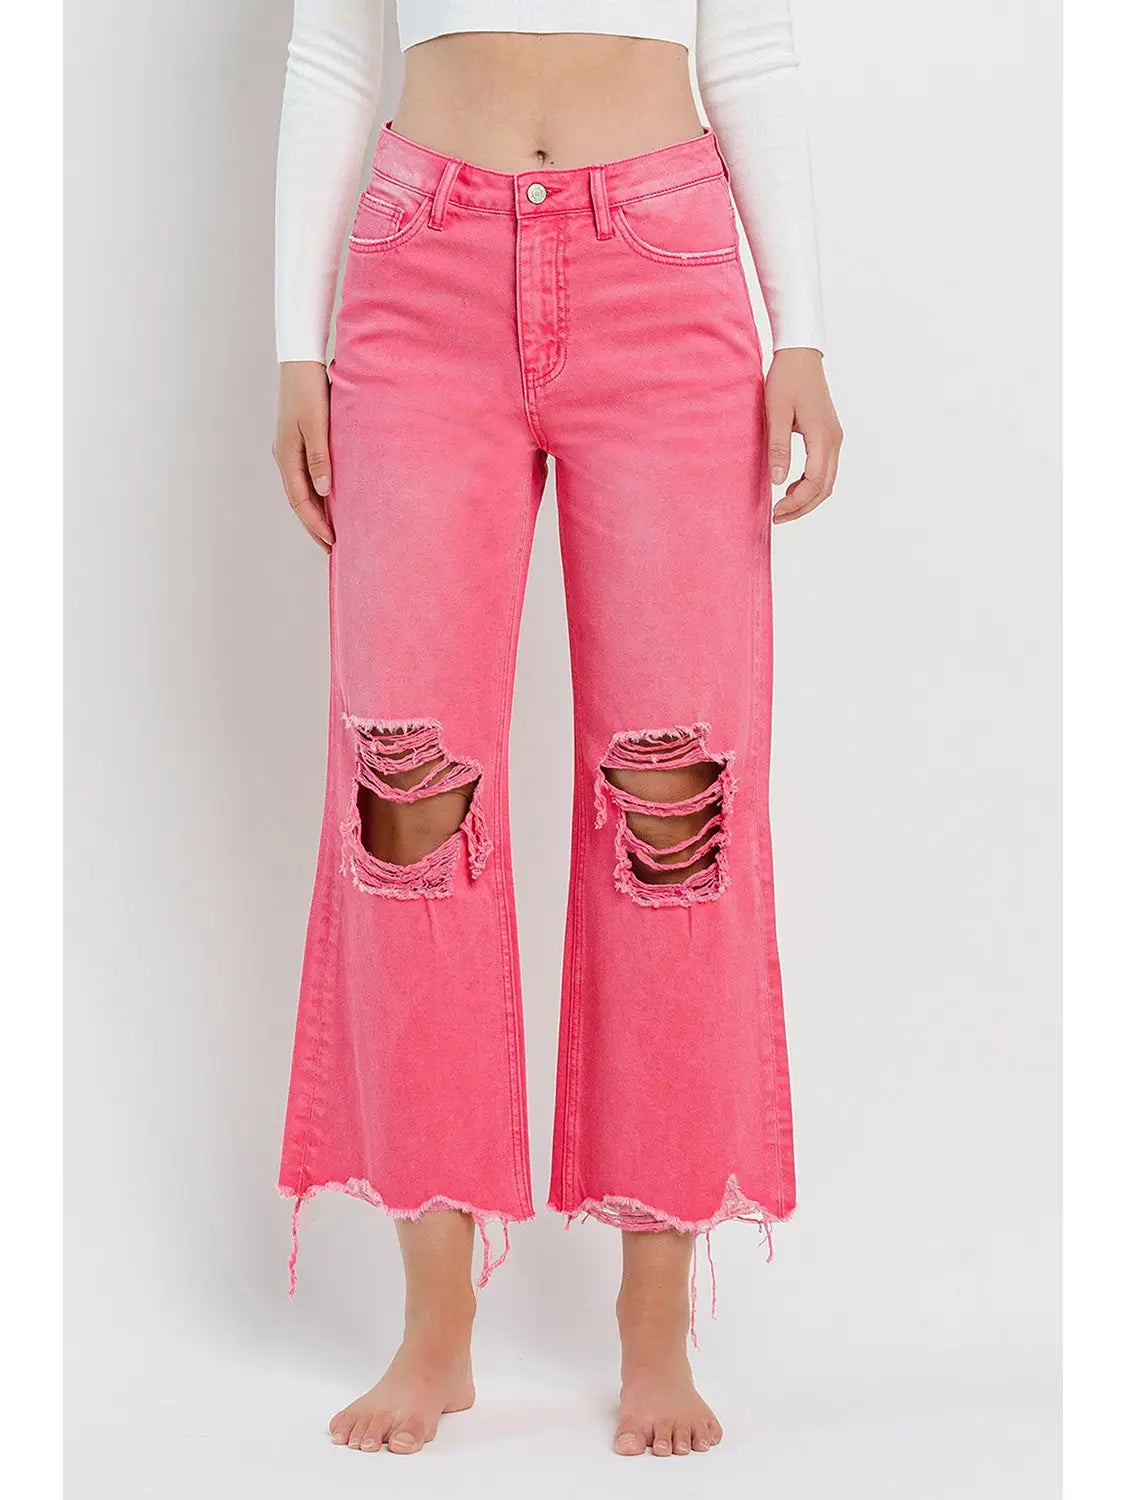 90's Vintage Hot Pink High Rise Crop Jeans-Bottoms-Deadwood South Boutique & Company-Deadwood South Boutique, Women's Fashion Boutique in Henderson, TX